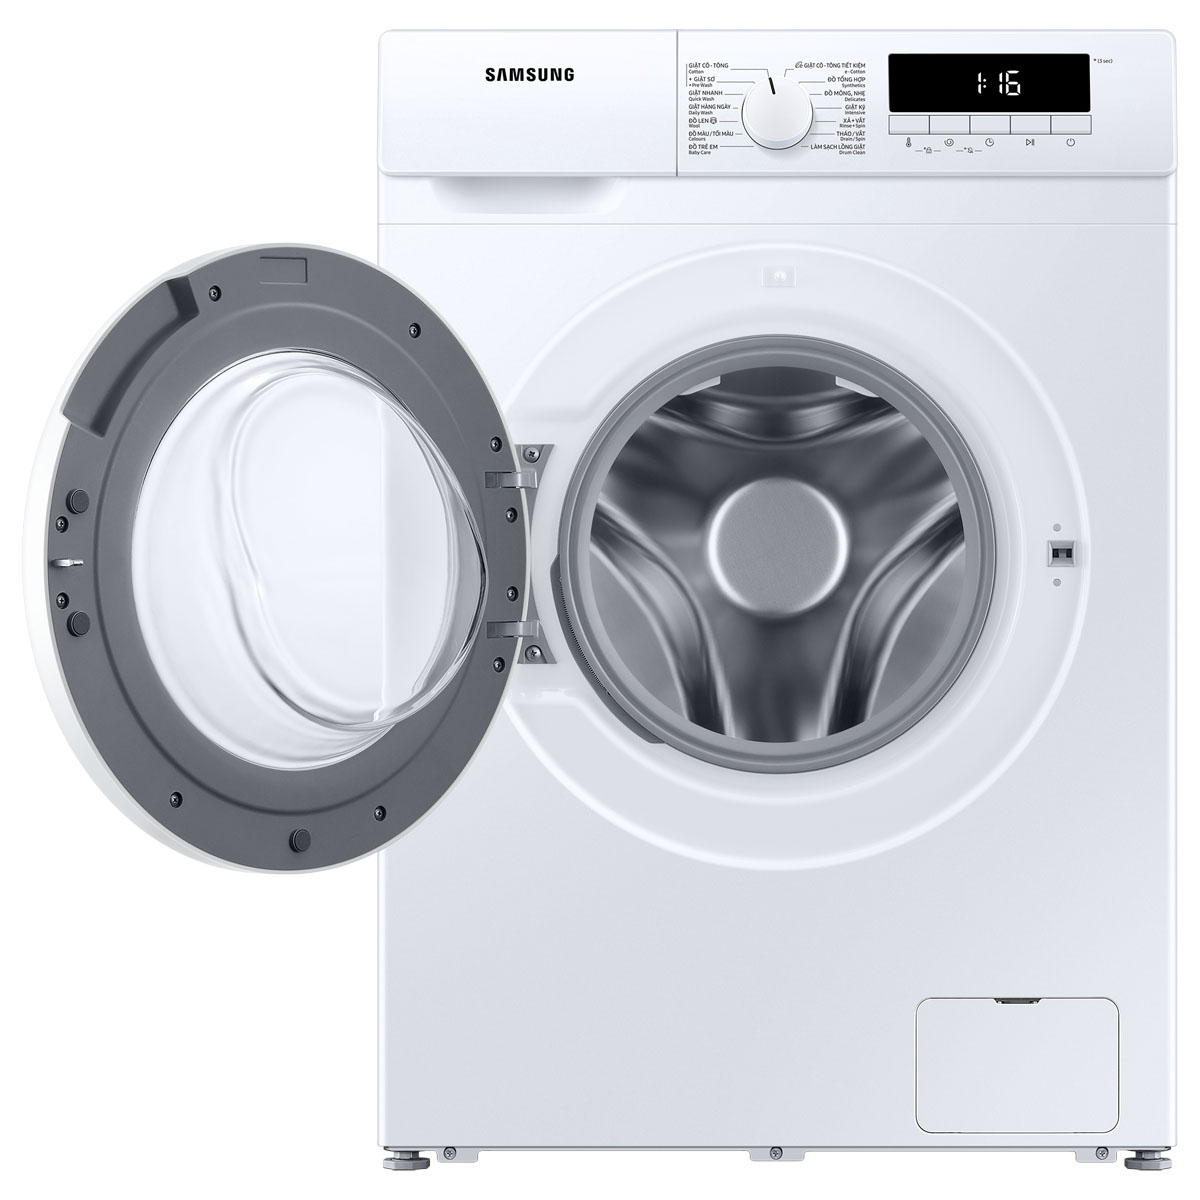 Máy giặt Samsung cửa trước Digital Inverter 9kg WW90T3040WW/SV - Chỉ giao HCM